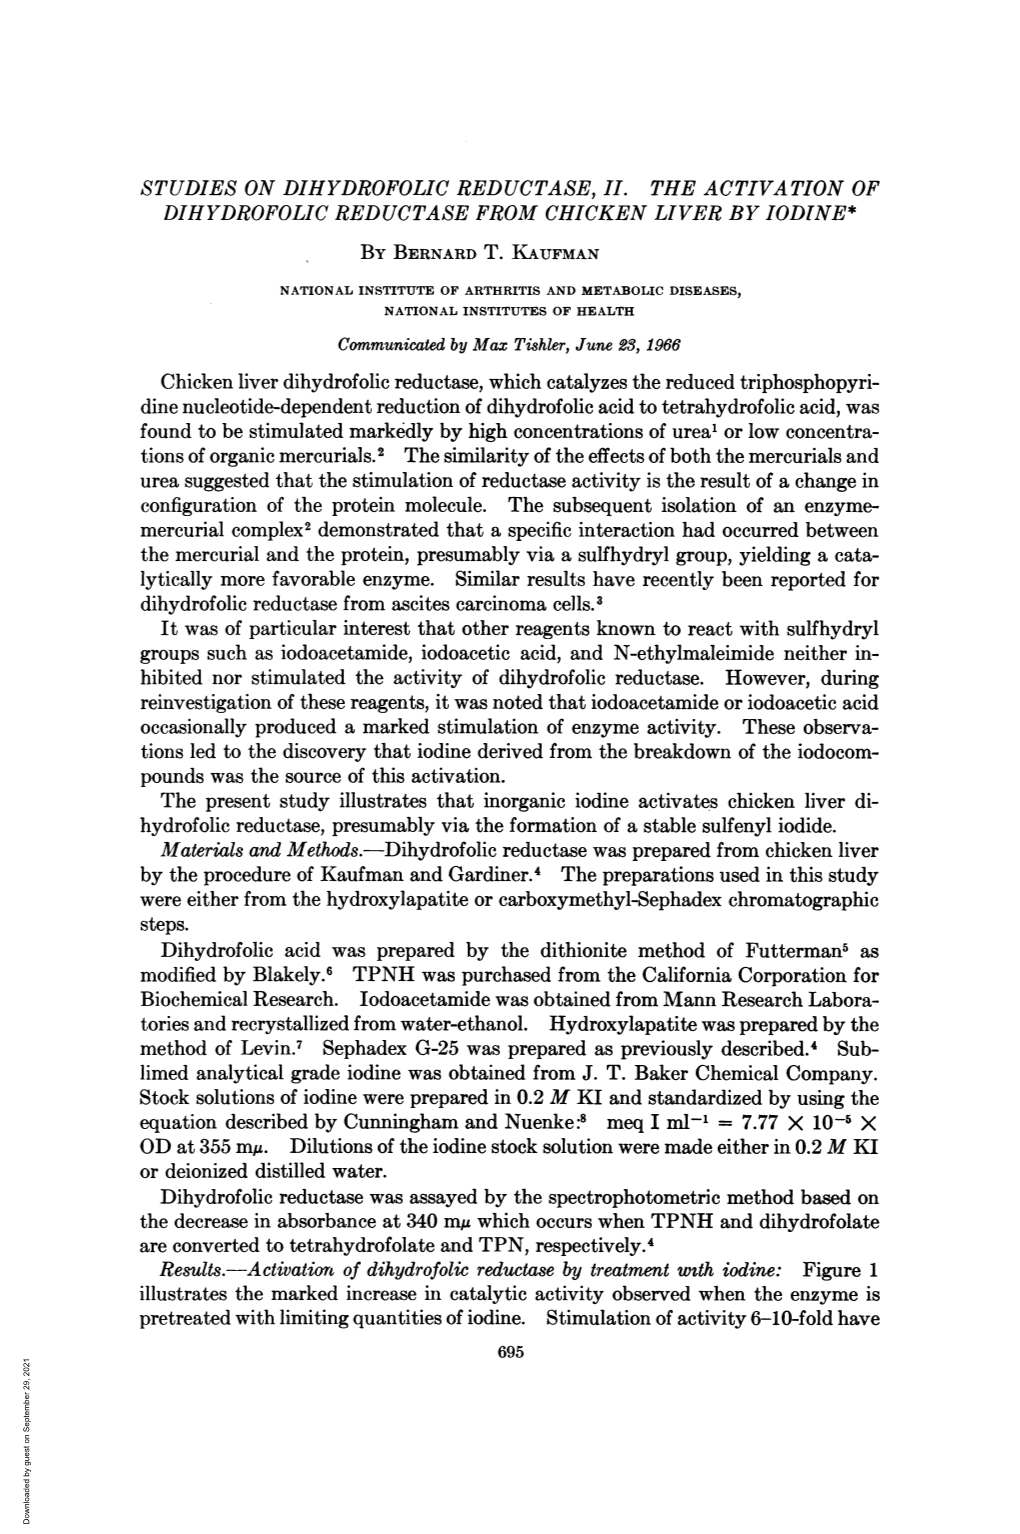 STUDIES on DIHYDROFOLIC REDUCTASE, HI. the ACTIVATION of DIHYDROFOLIC REDUCTASE from CHICKEN LIVER by Iodlne* by BERNARD T